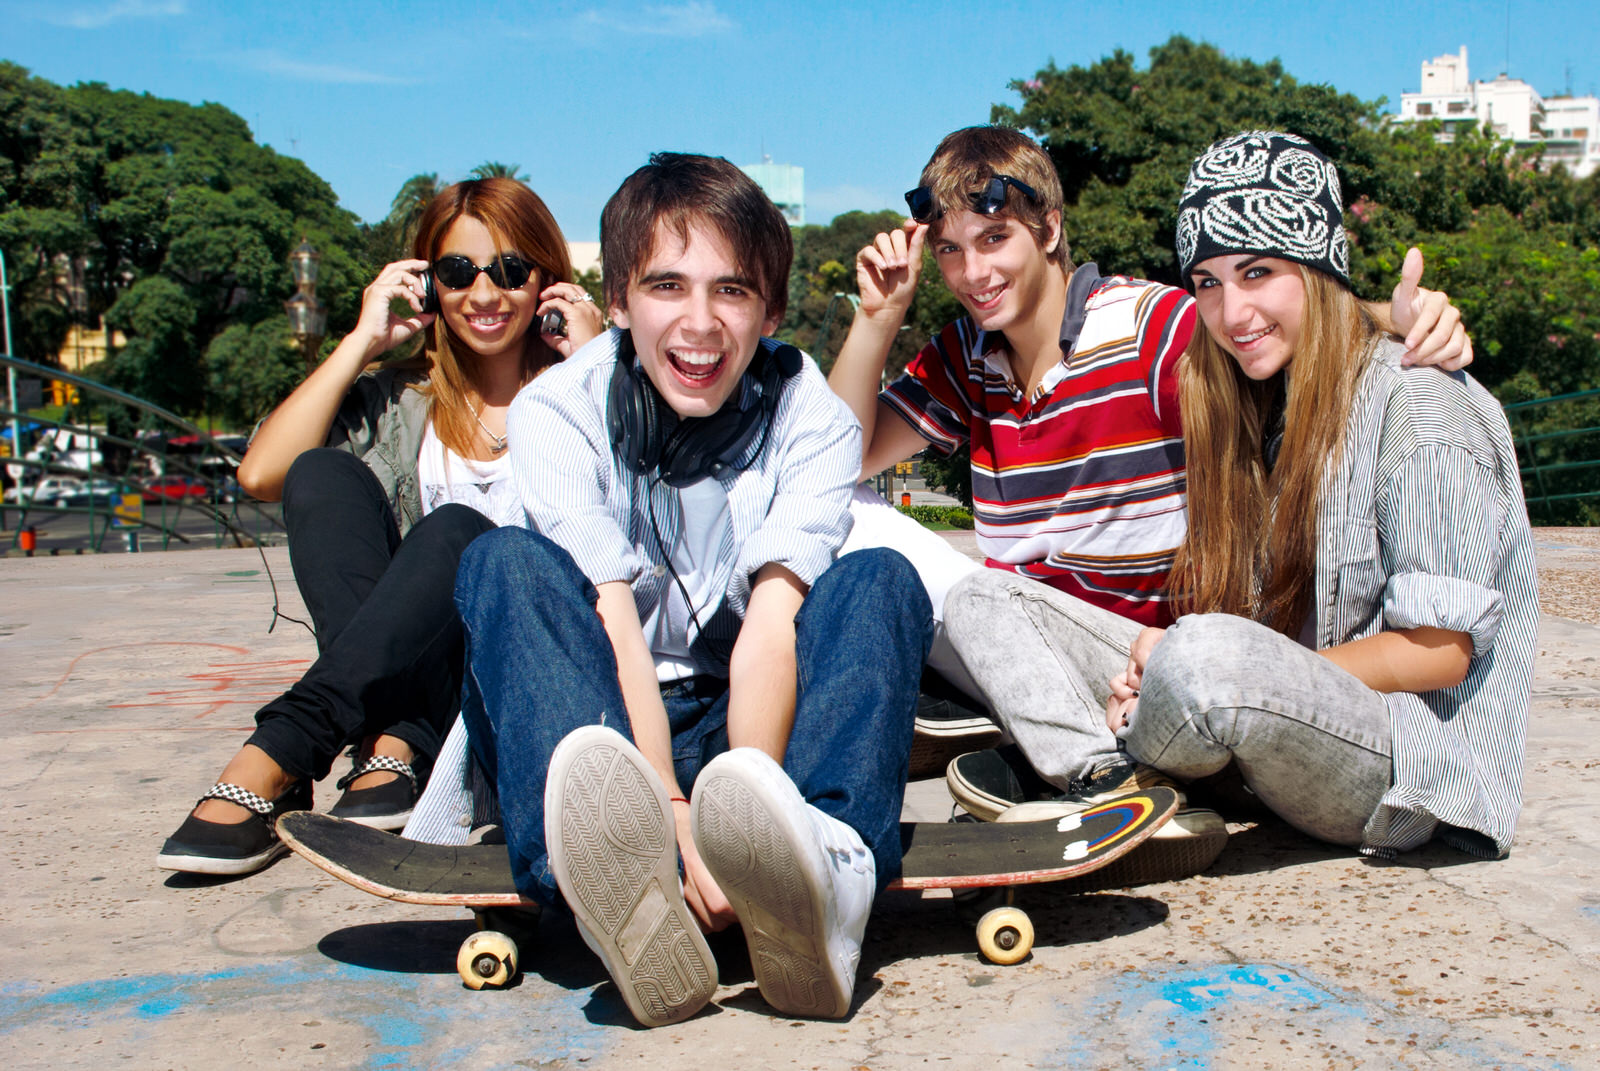 WS Teens skateboard.jpg